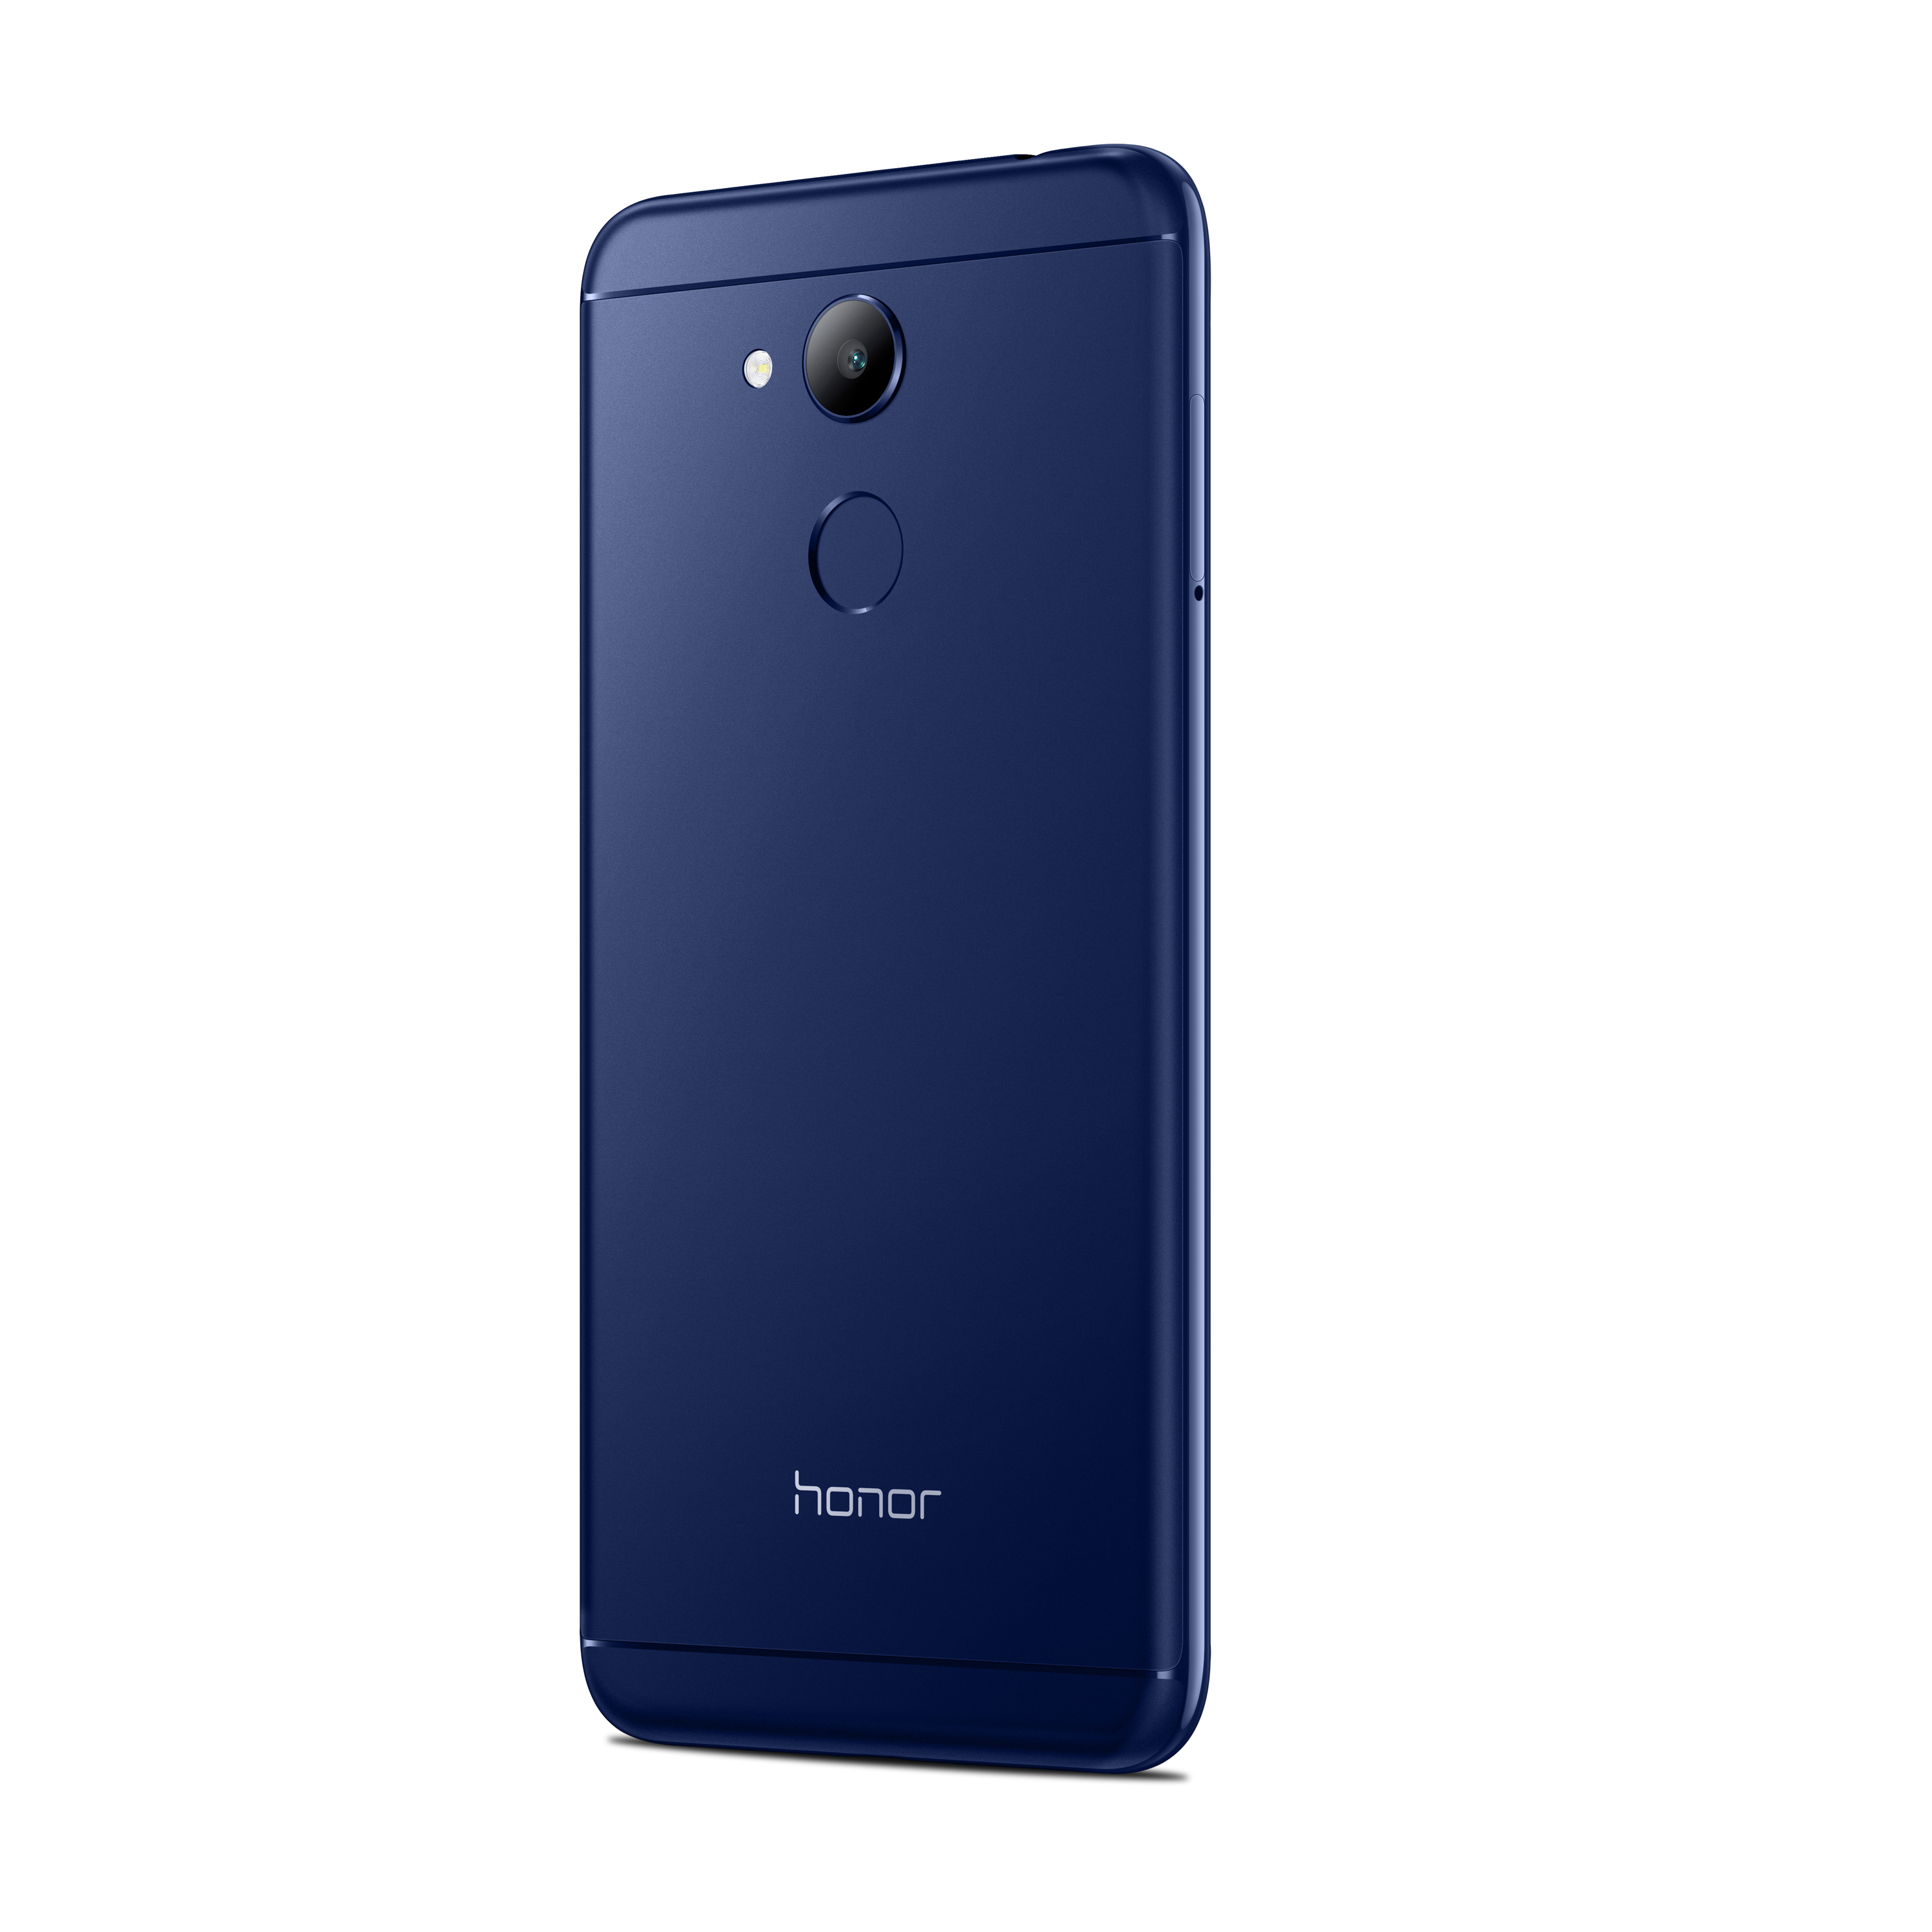 Honor 6 синий. Huawei Honor 6c Pro. Huawei Honor 6c. Смартфон Honor 6c Pro. Huawei Honor 6c Pro JMM-l22.